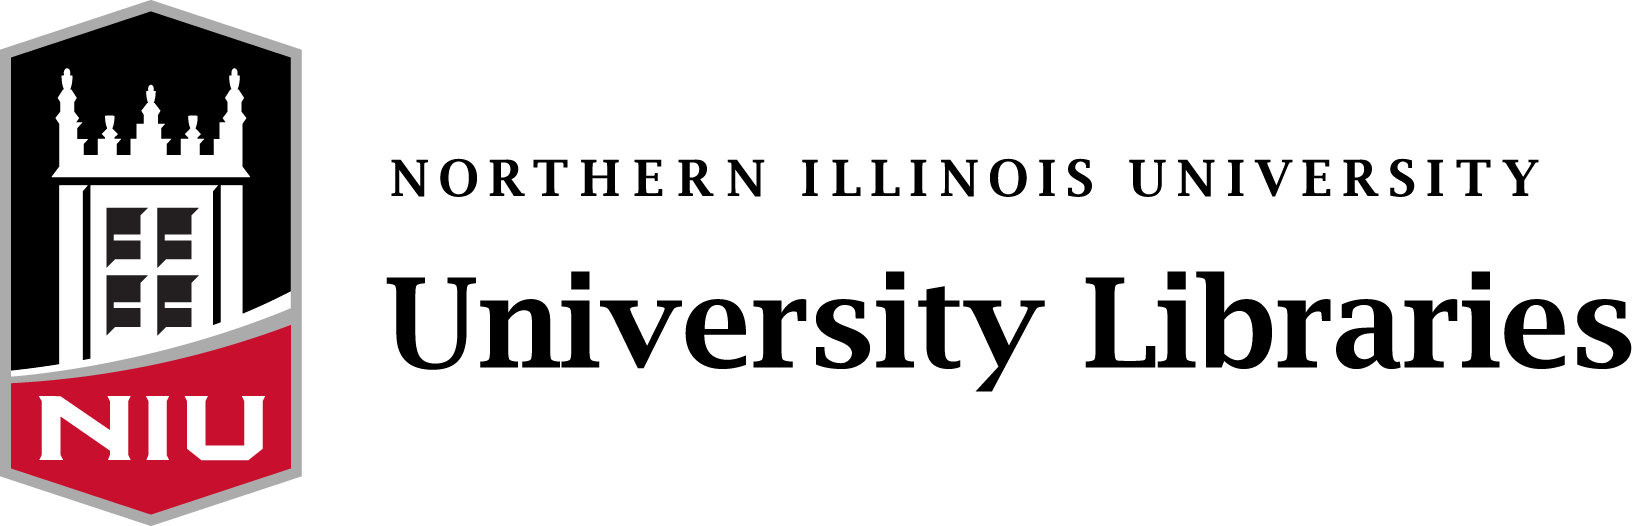 NIU Libraries Logo - Black Text with red NIU shield